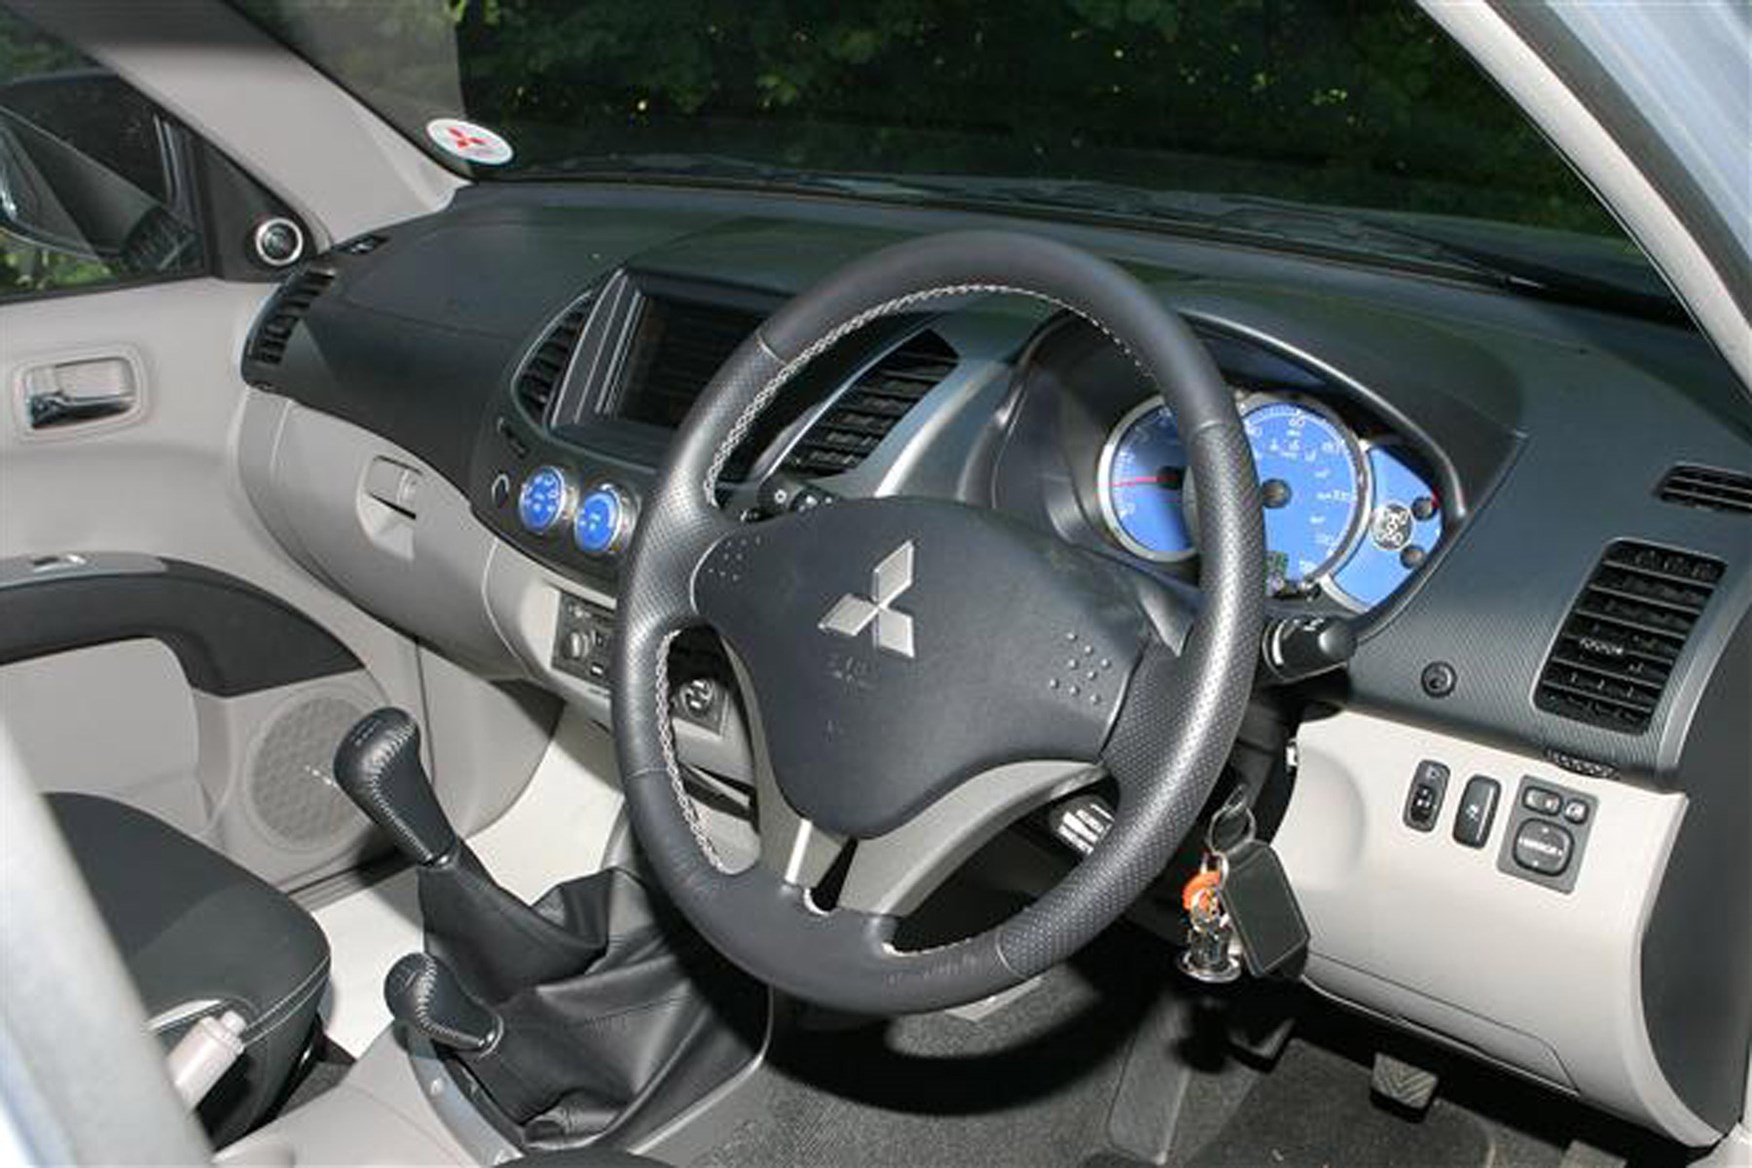 Mitsubishi L200 2006-2015 review on Parkers Vans - interior